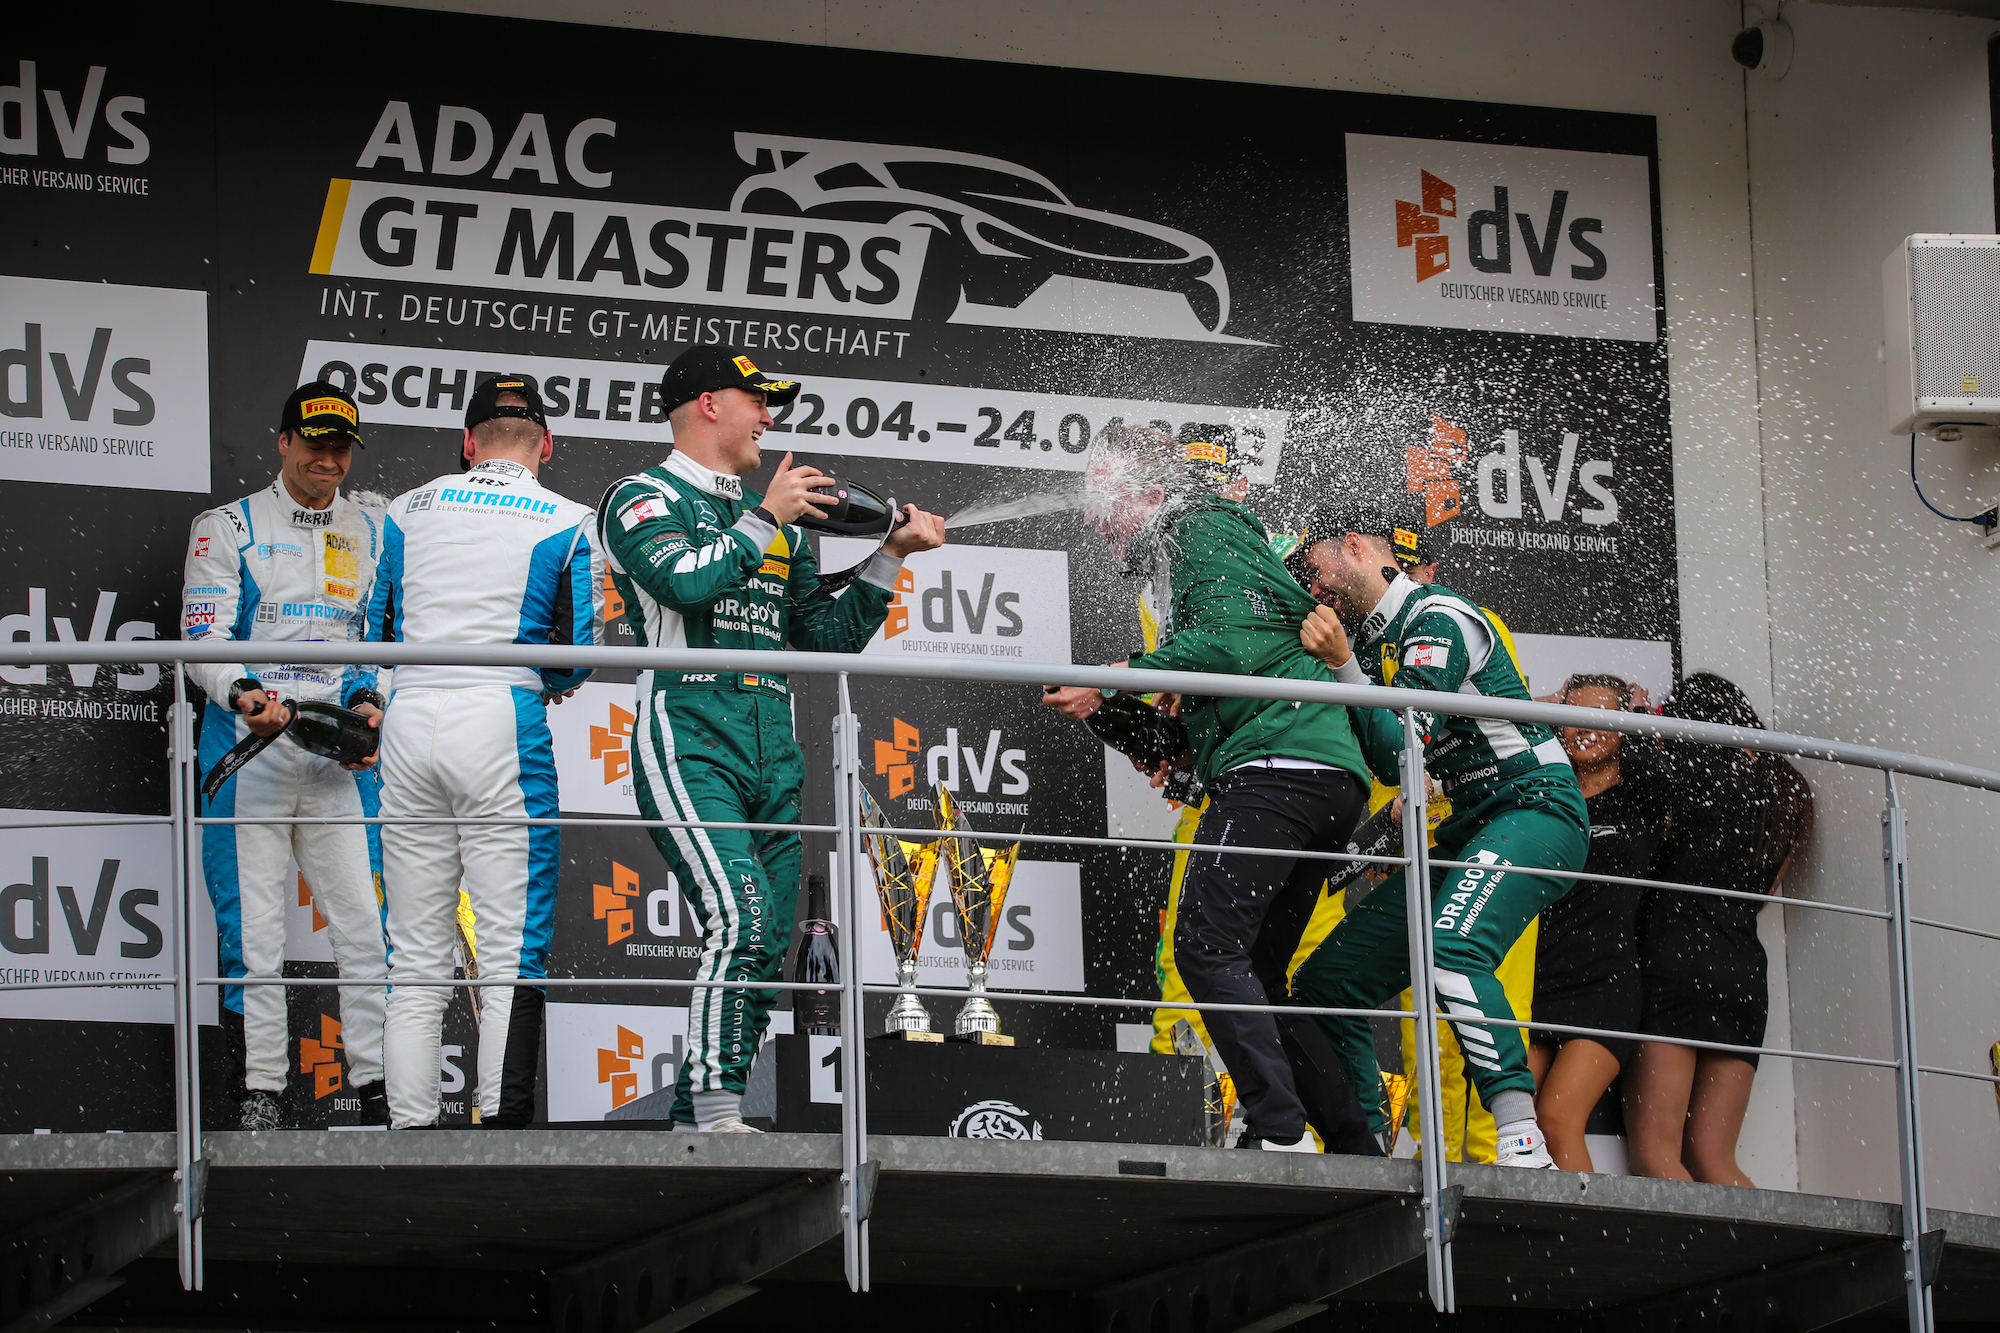 ADAC GT Masters